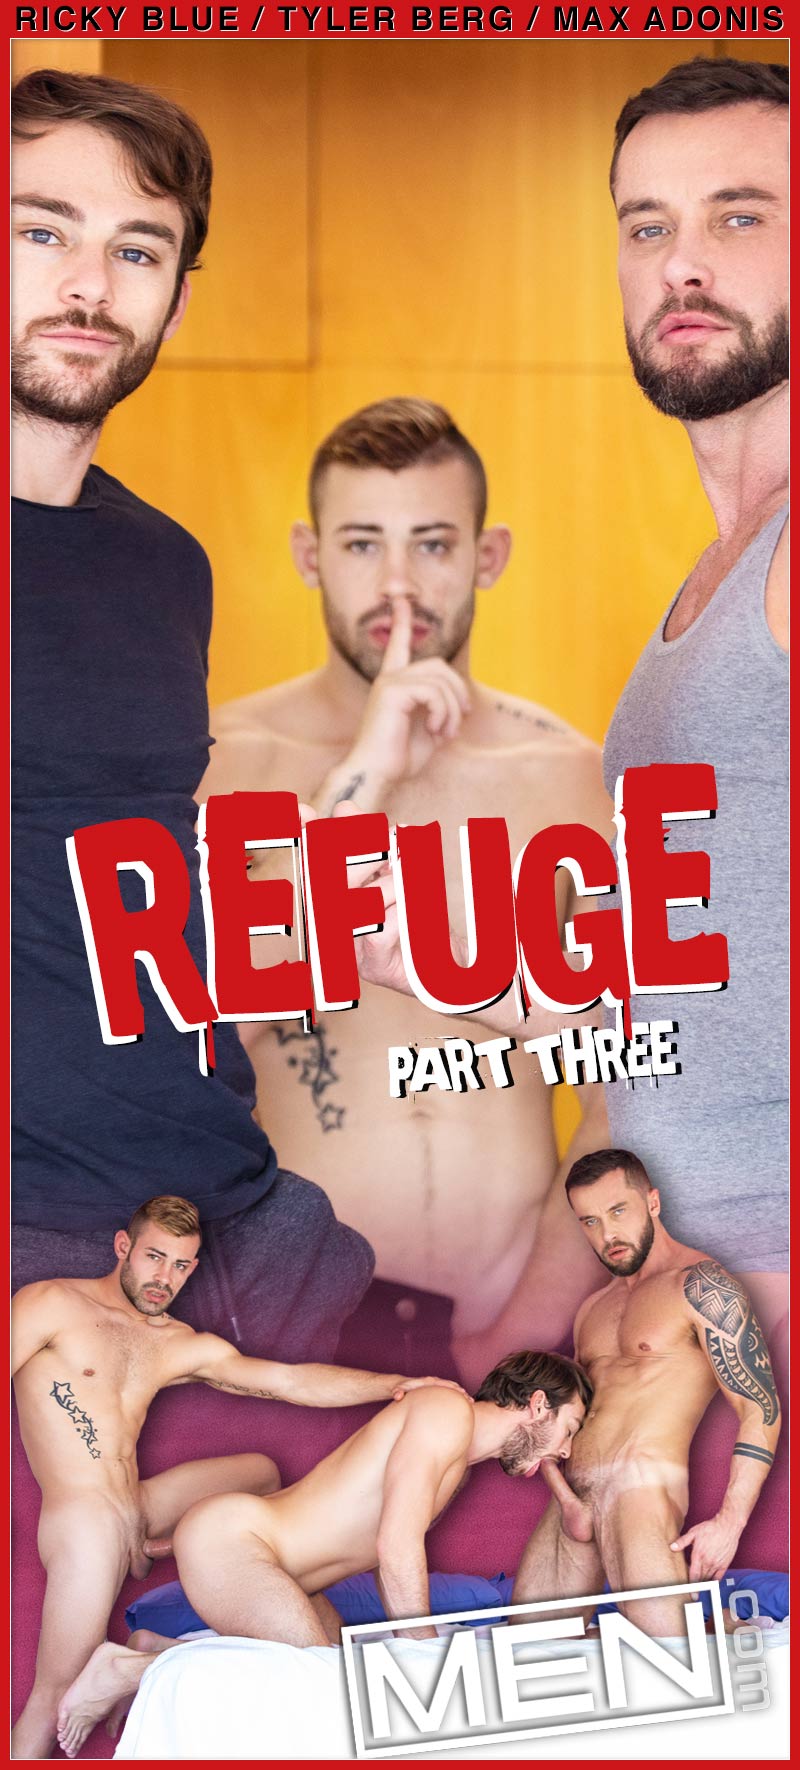 Refuge, Part Three (Max Adonis, Tyler Berg and Ricky Blue) at MEN.com